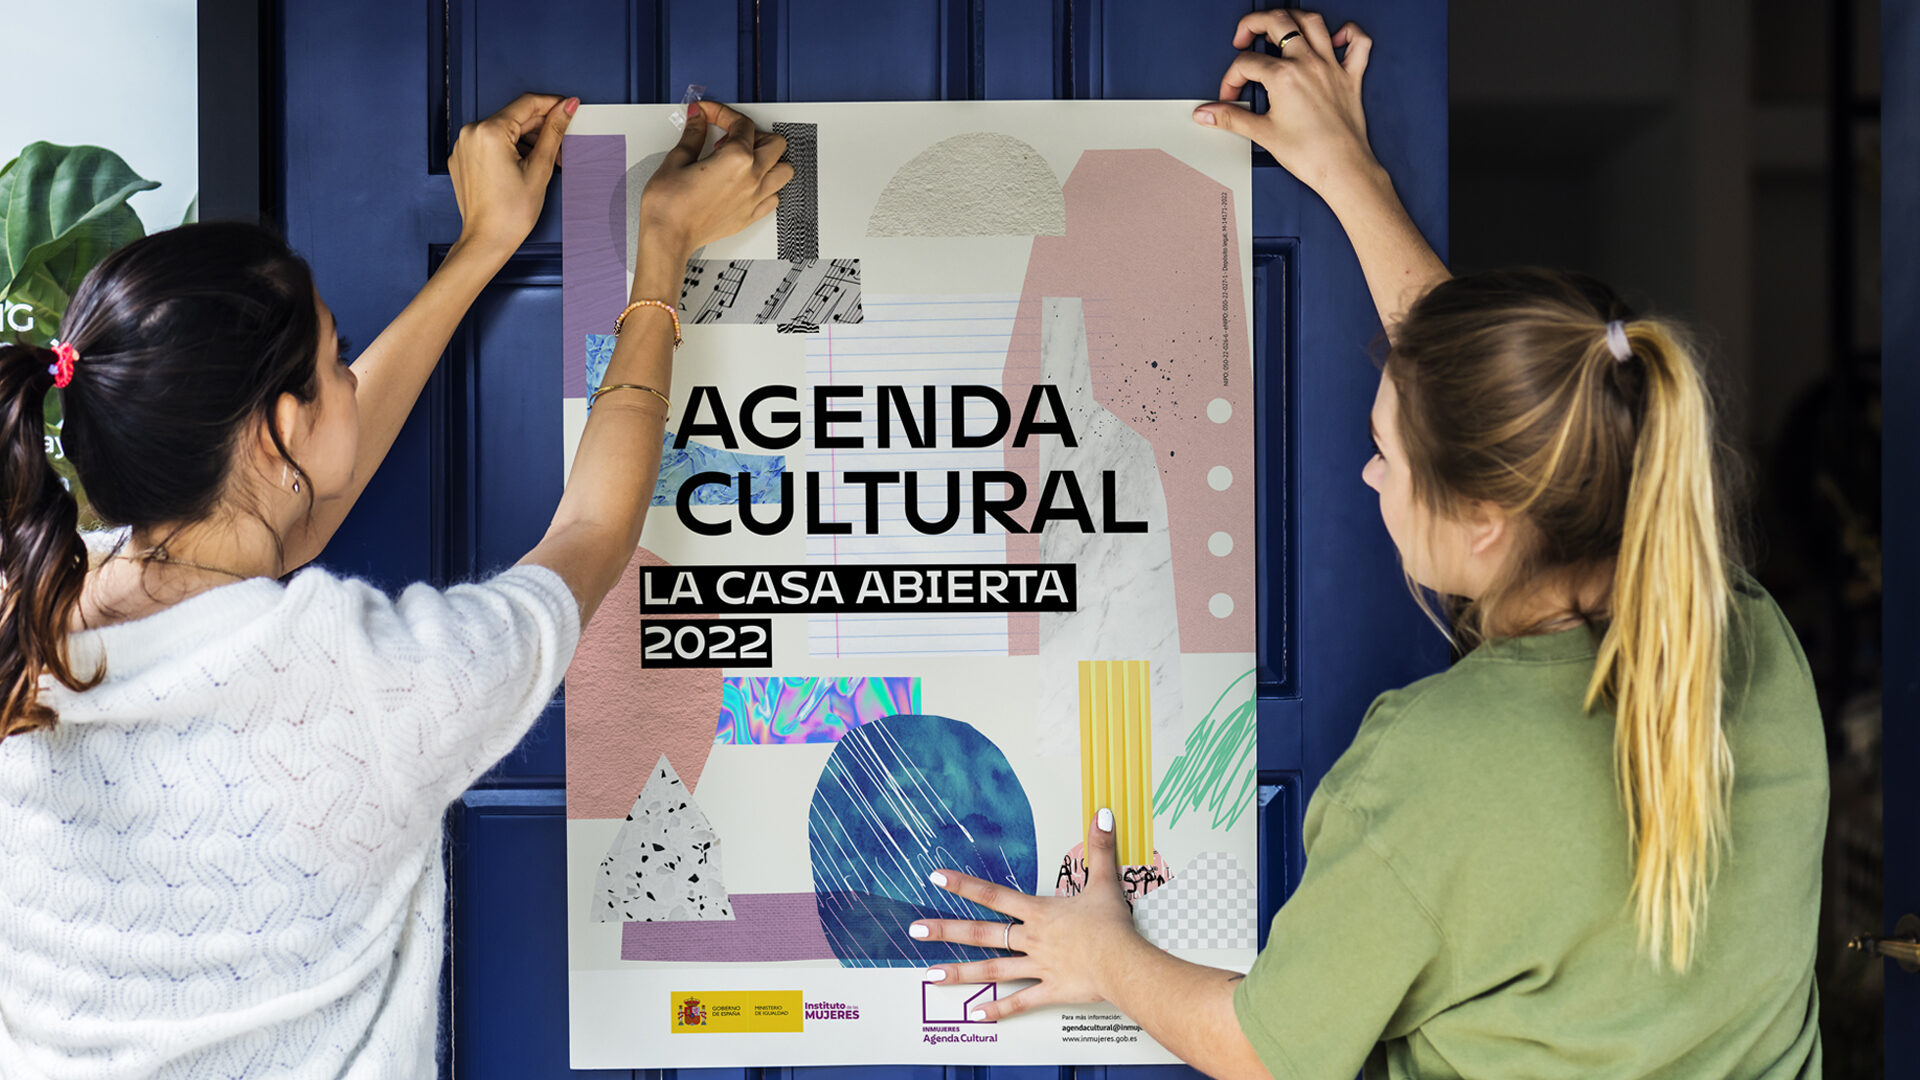 Agenda_Cultural_1920x1080